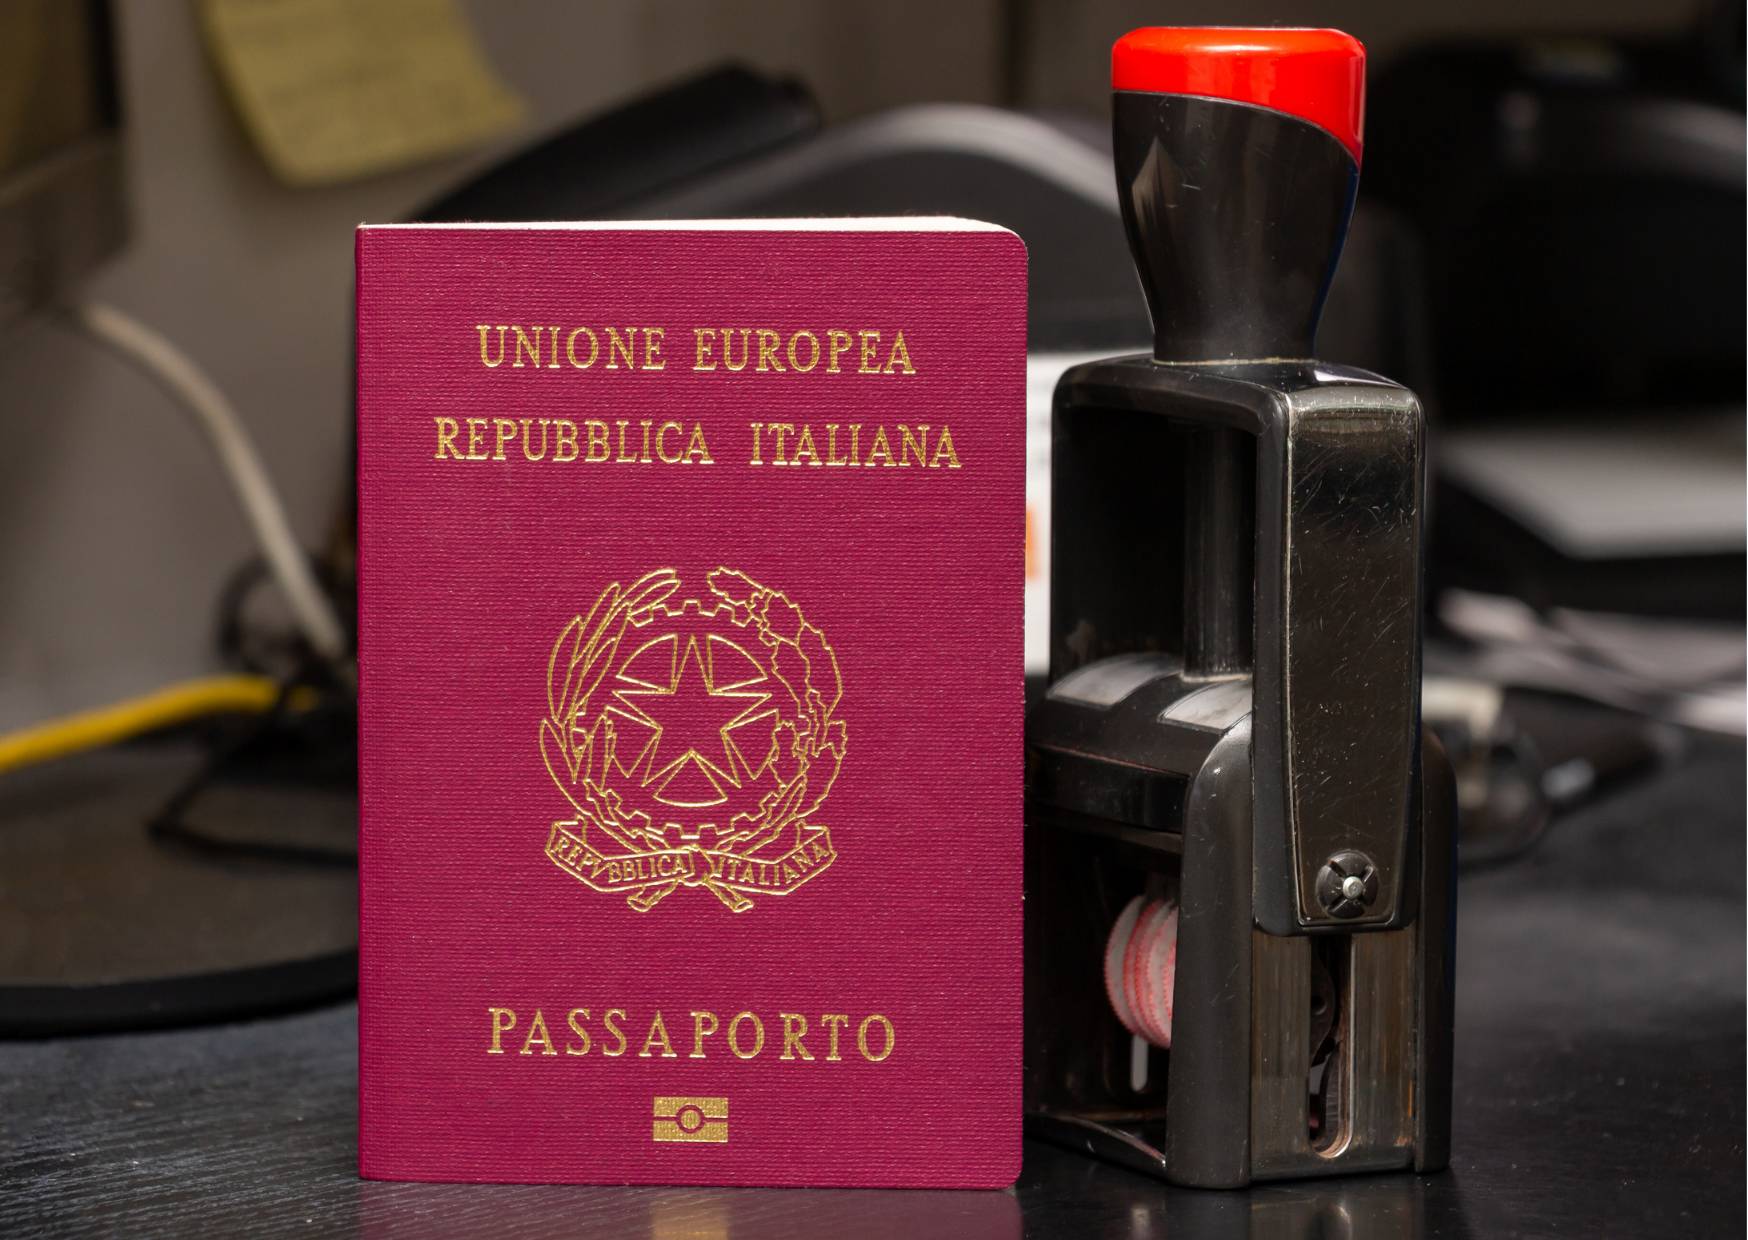 Getting Italian citizenship